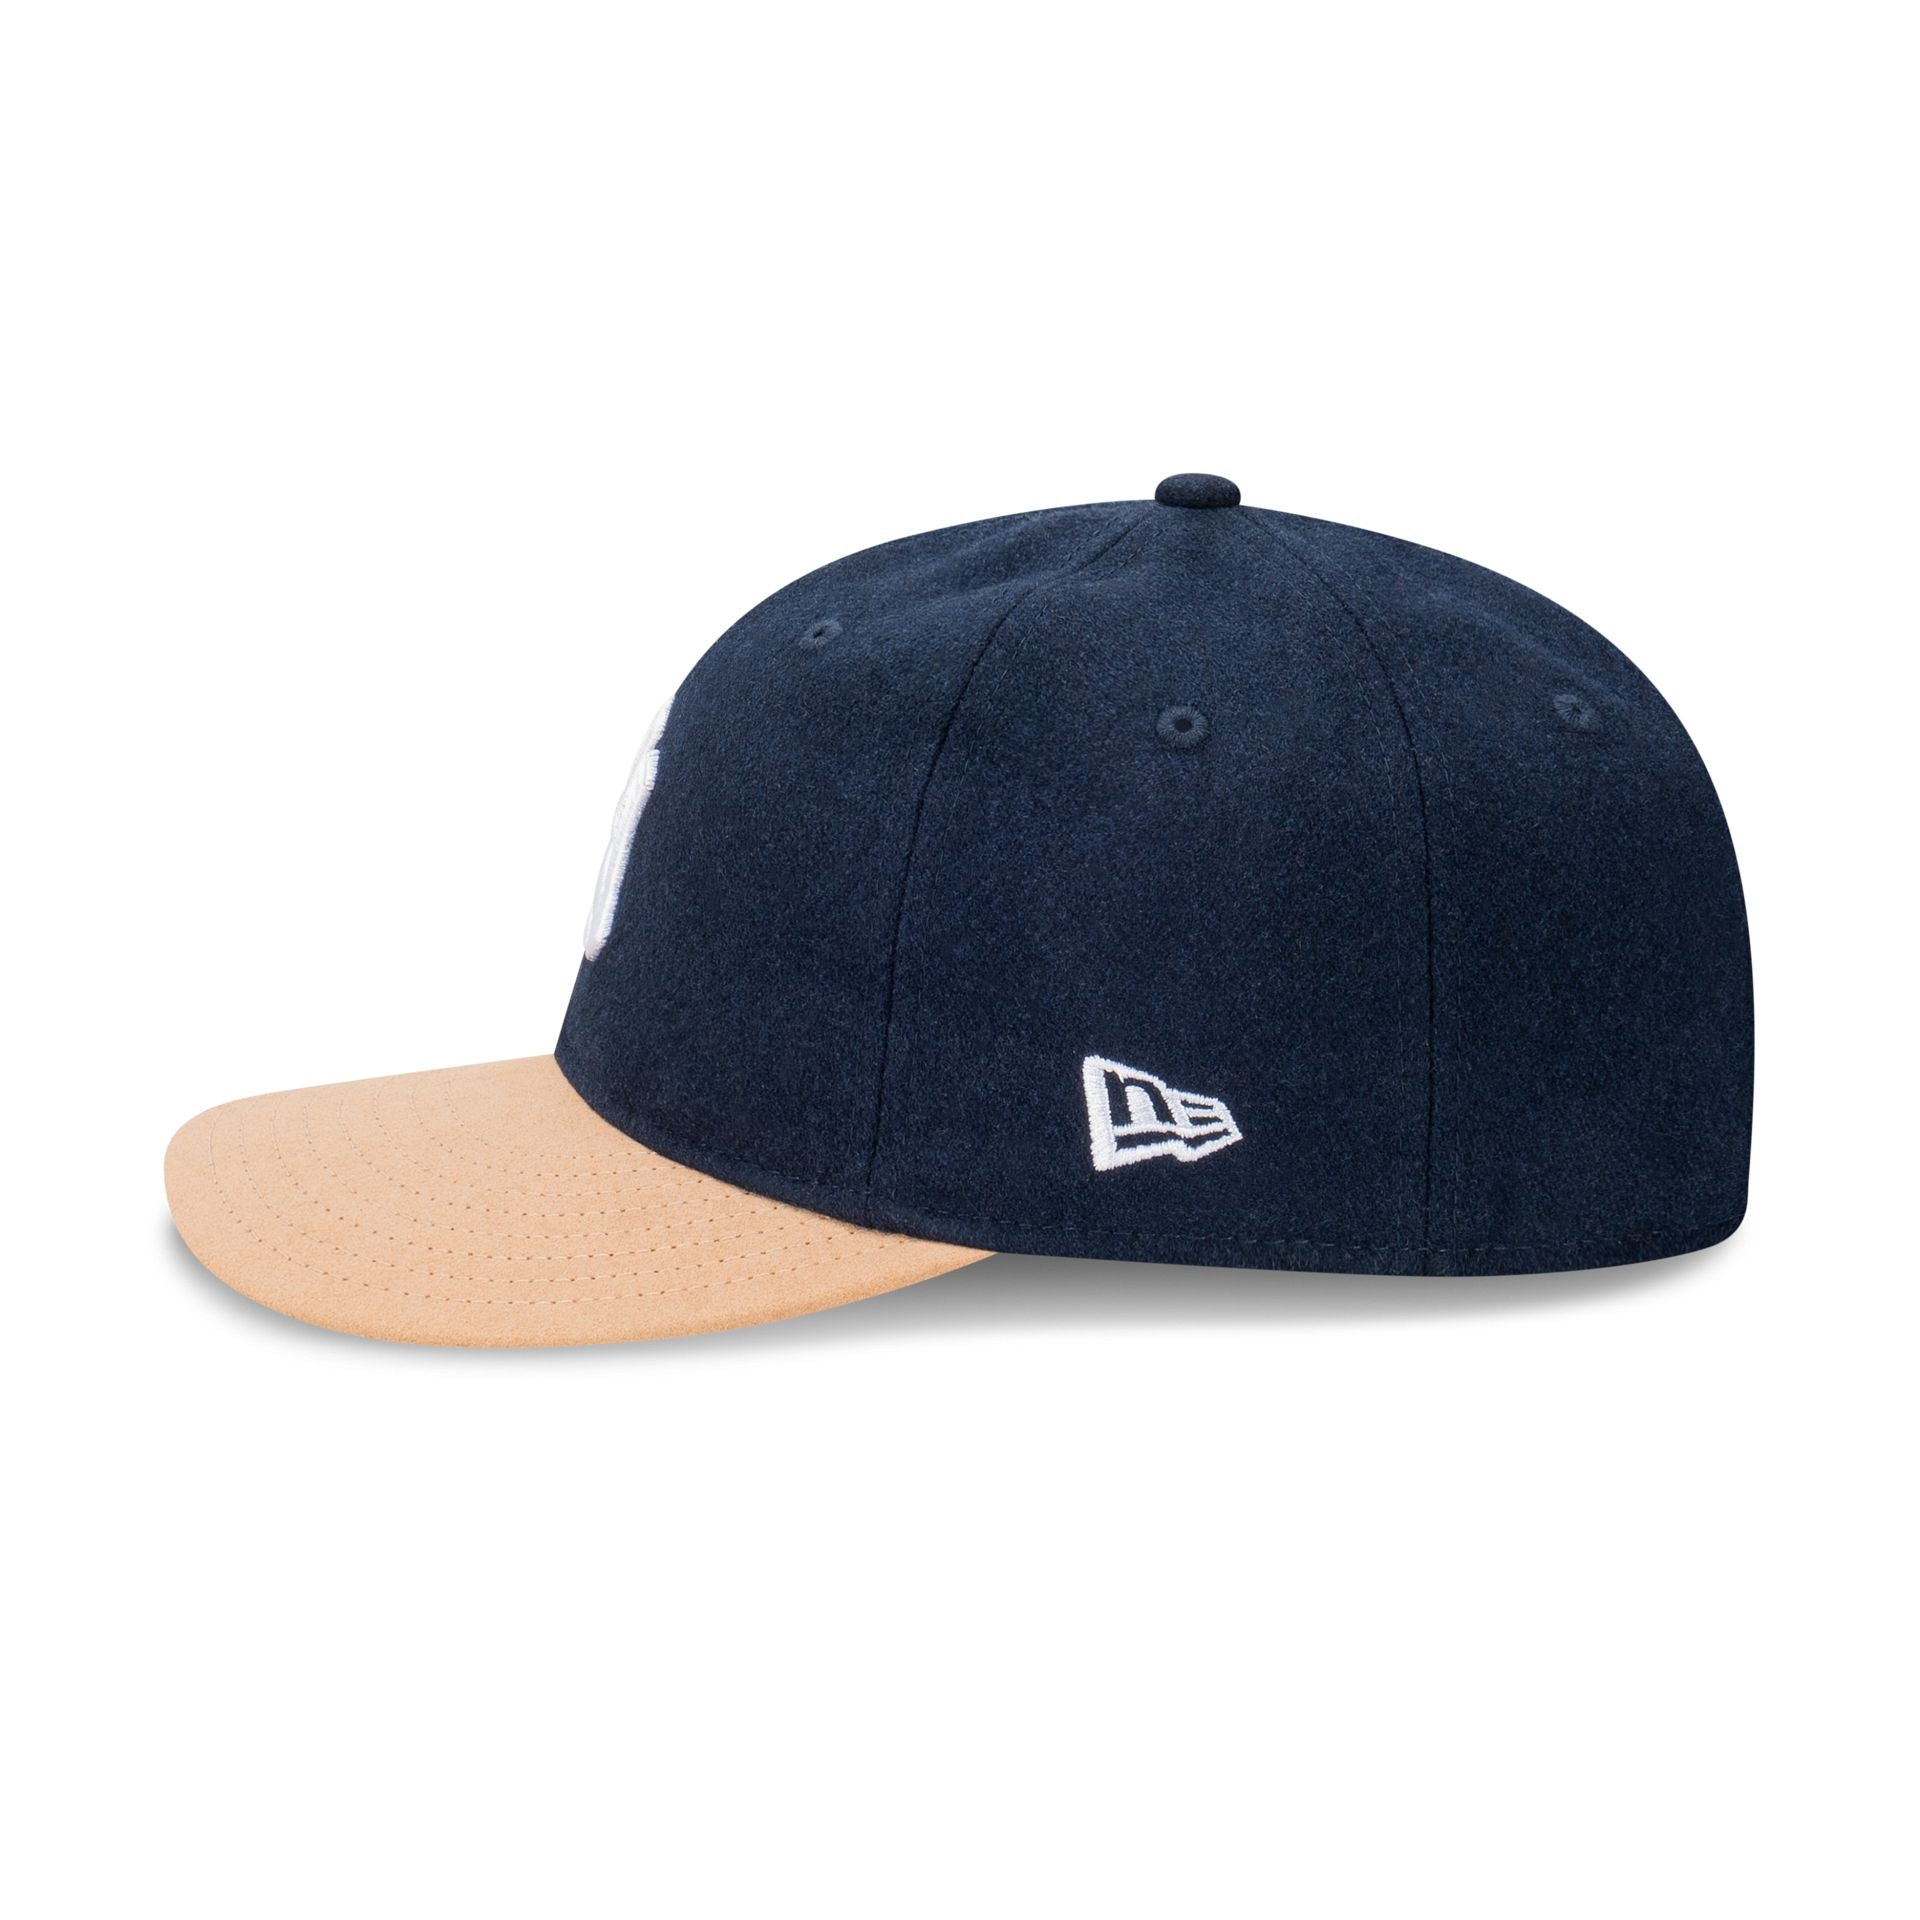 Retro Crown 9FIFTY Hats & Caps – New Era Cap Australia